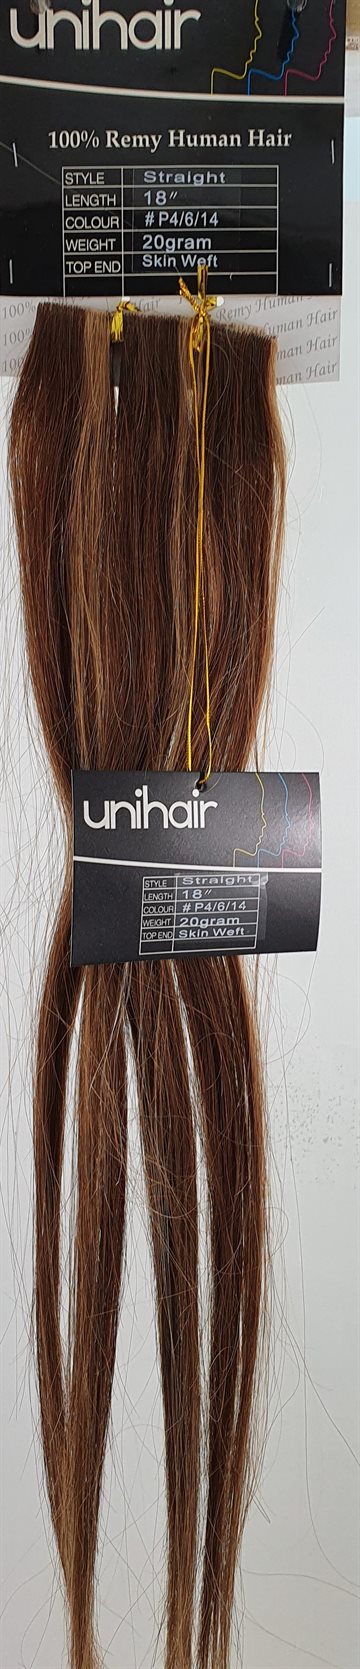 Human Hair - Skin Weft hair (tape on) color P4/6/14 mixed 45 cm. length.)